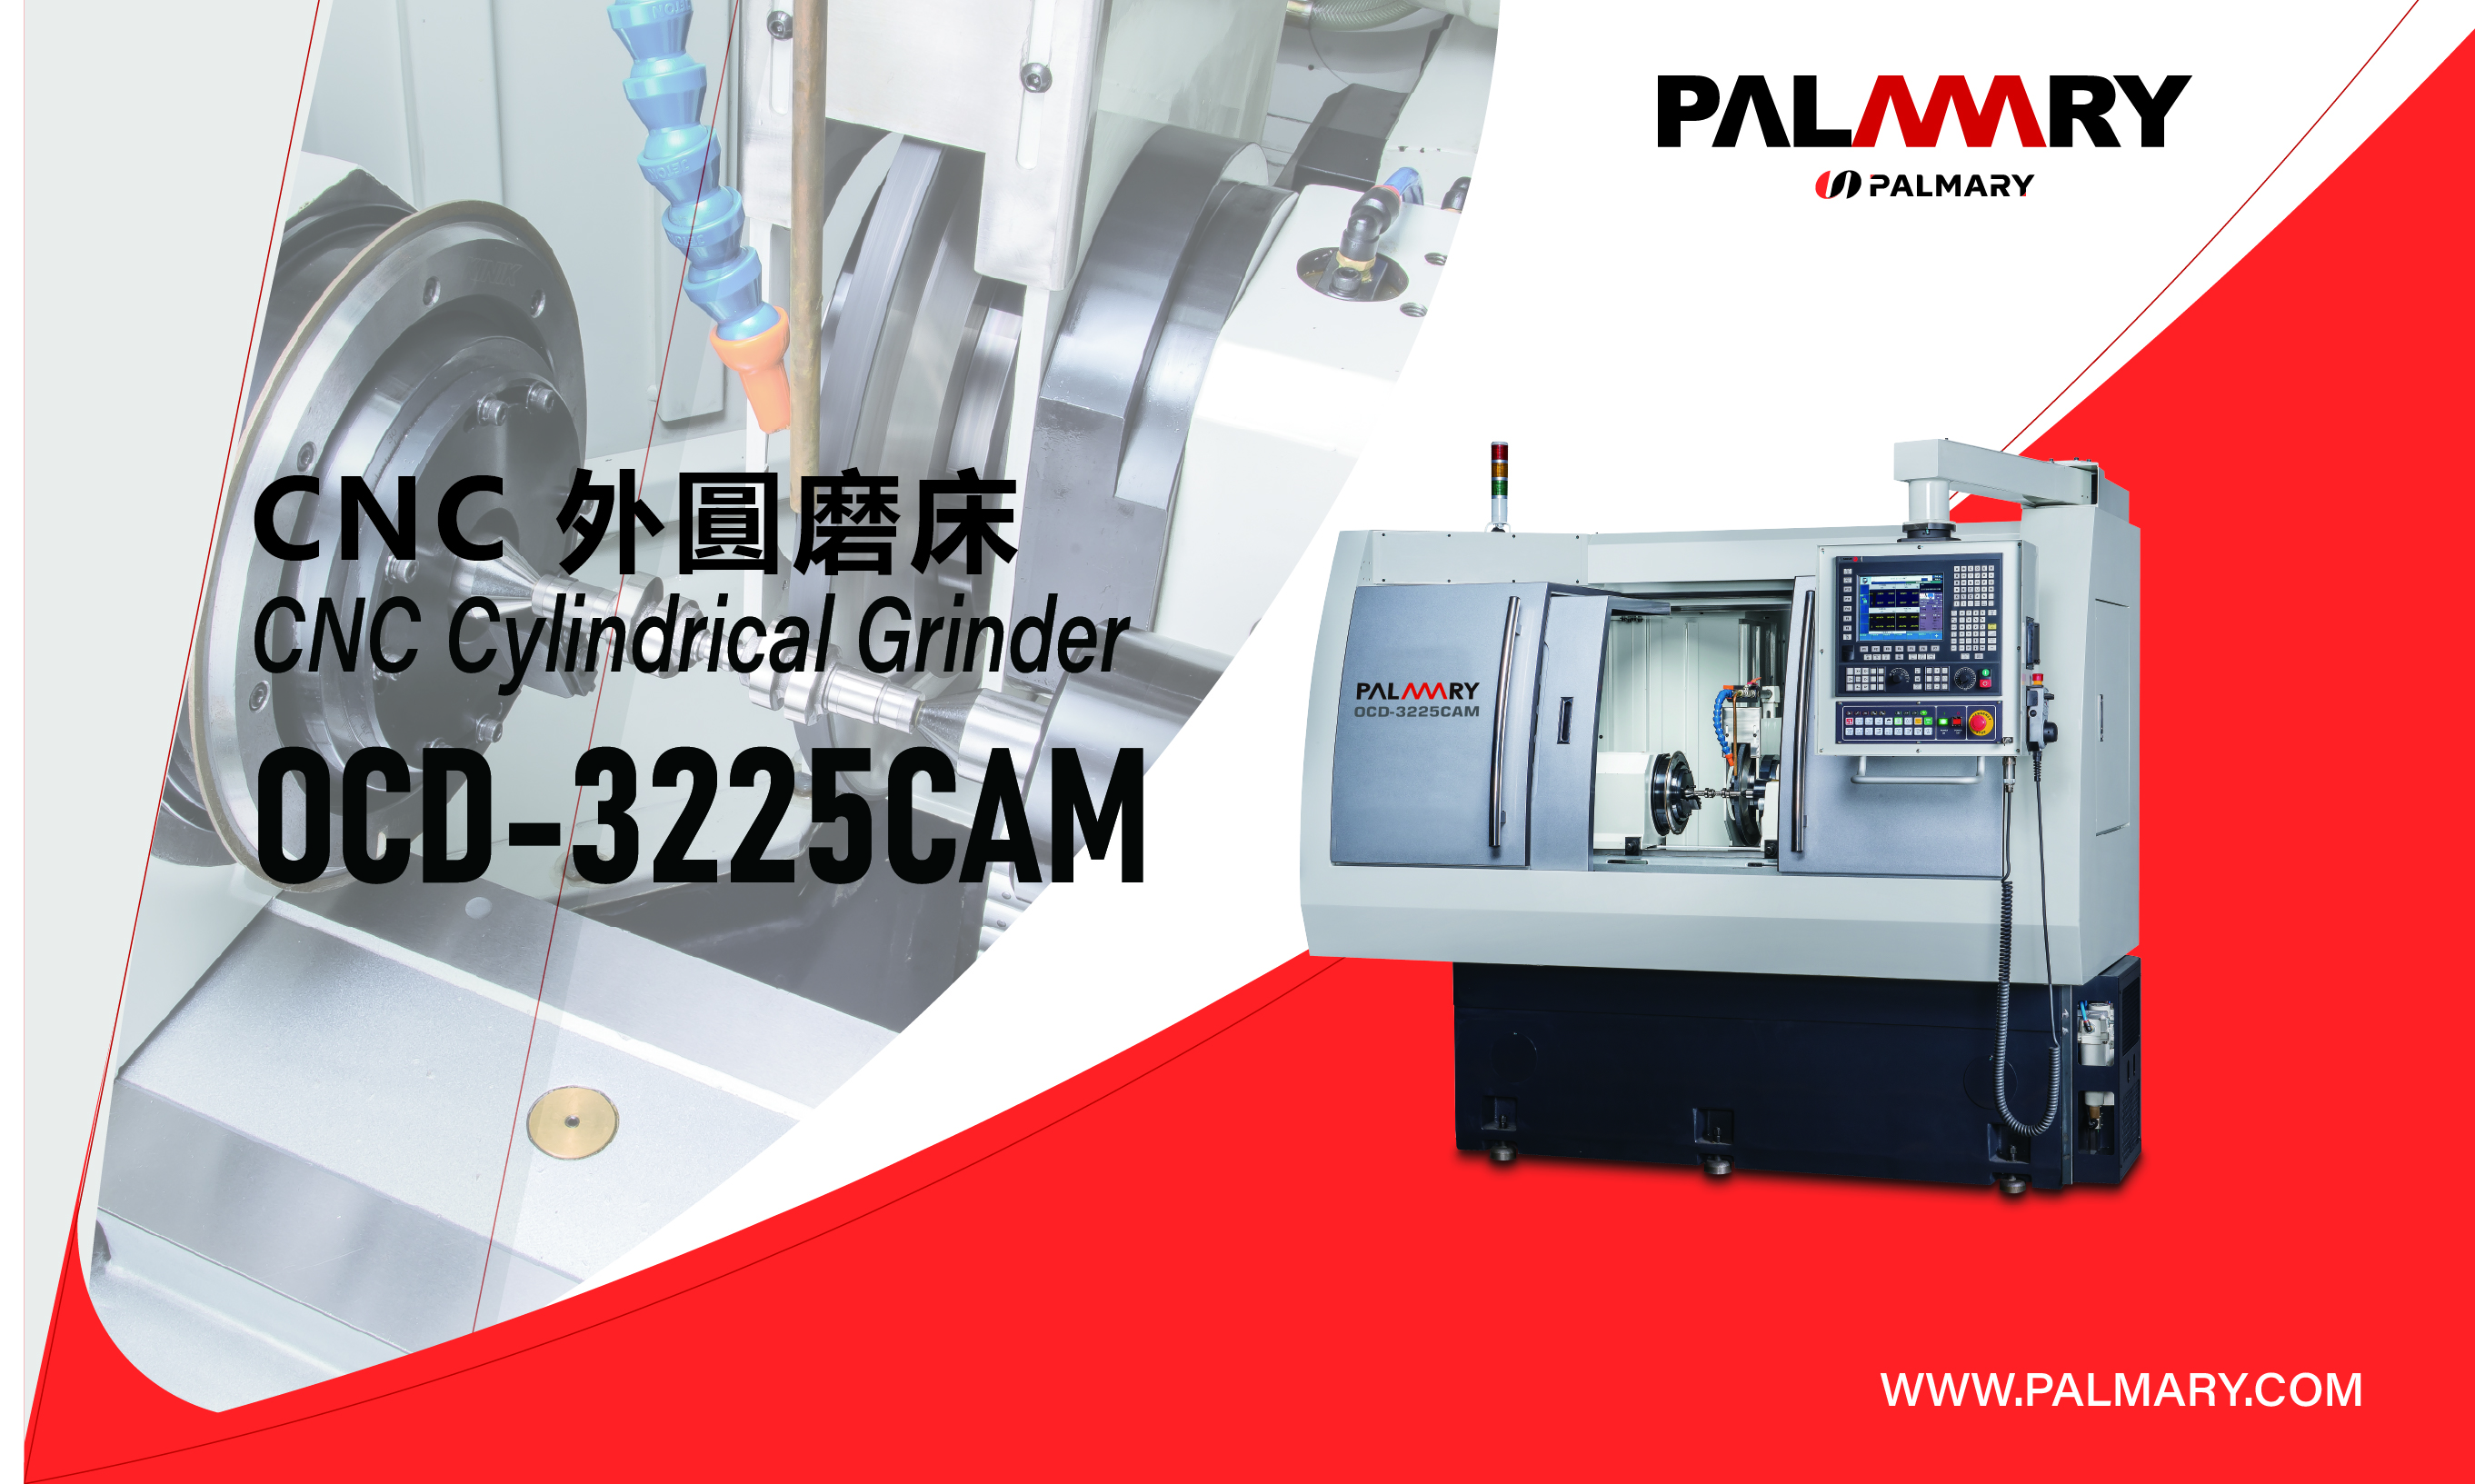 PALMARY|OCD-32100CAM - CNC外圓磨床 [CAM系列] -異形研磨